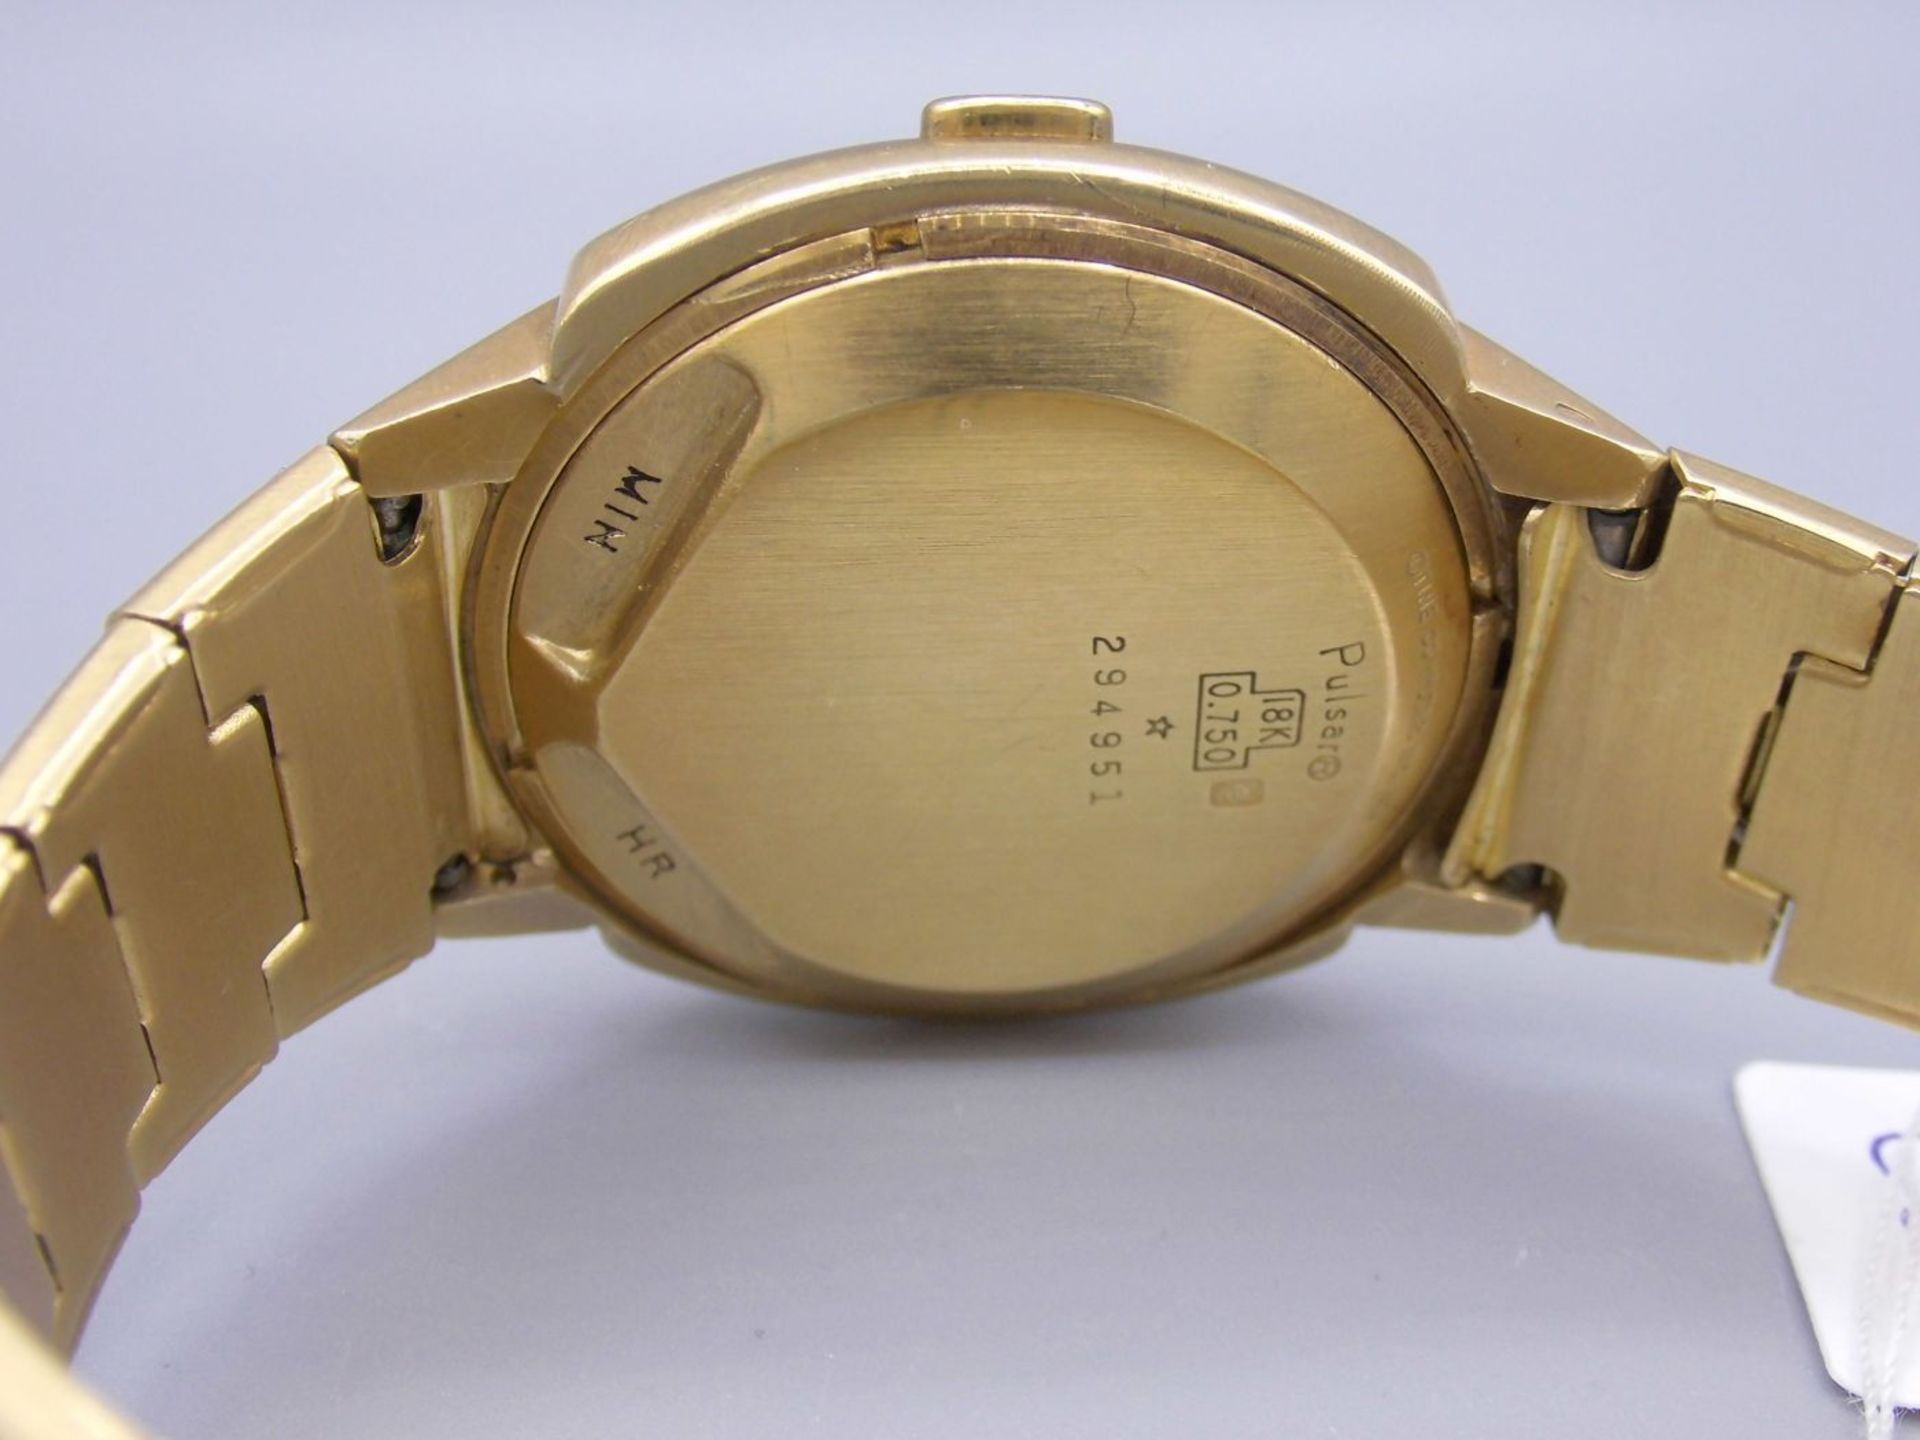 GOLDENE ARMBANDUHR / DIGITALUHR : Pulsar P3 "Date Command" / digital watch, 1970er Jahre, Gehäuse - Bild 5 aus 7